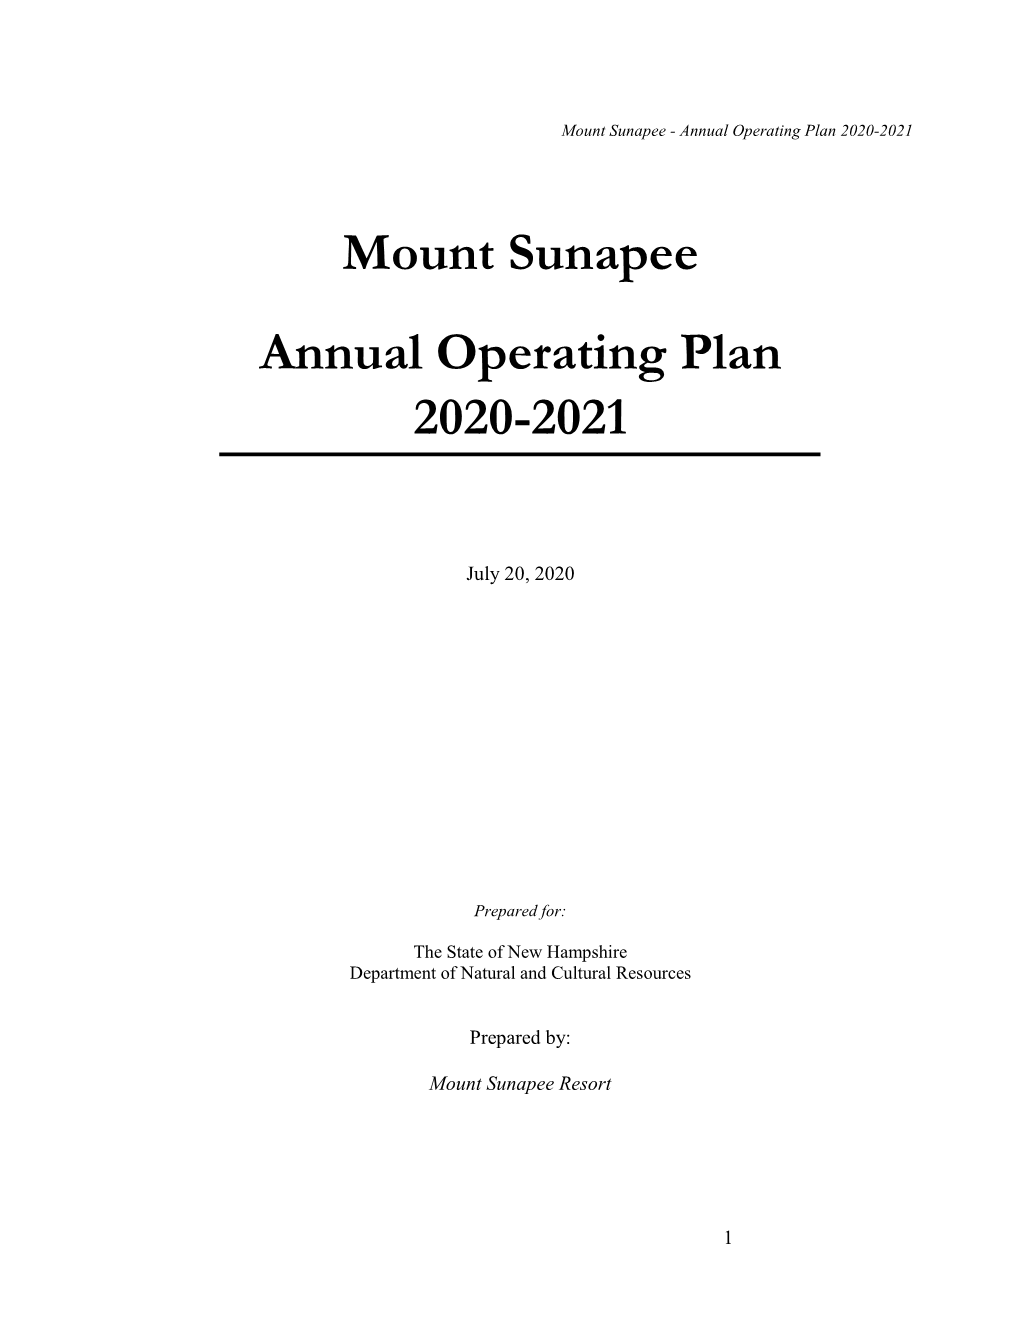 Mount Sunapee Annual Operating Plan